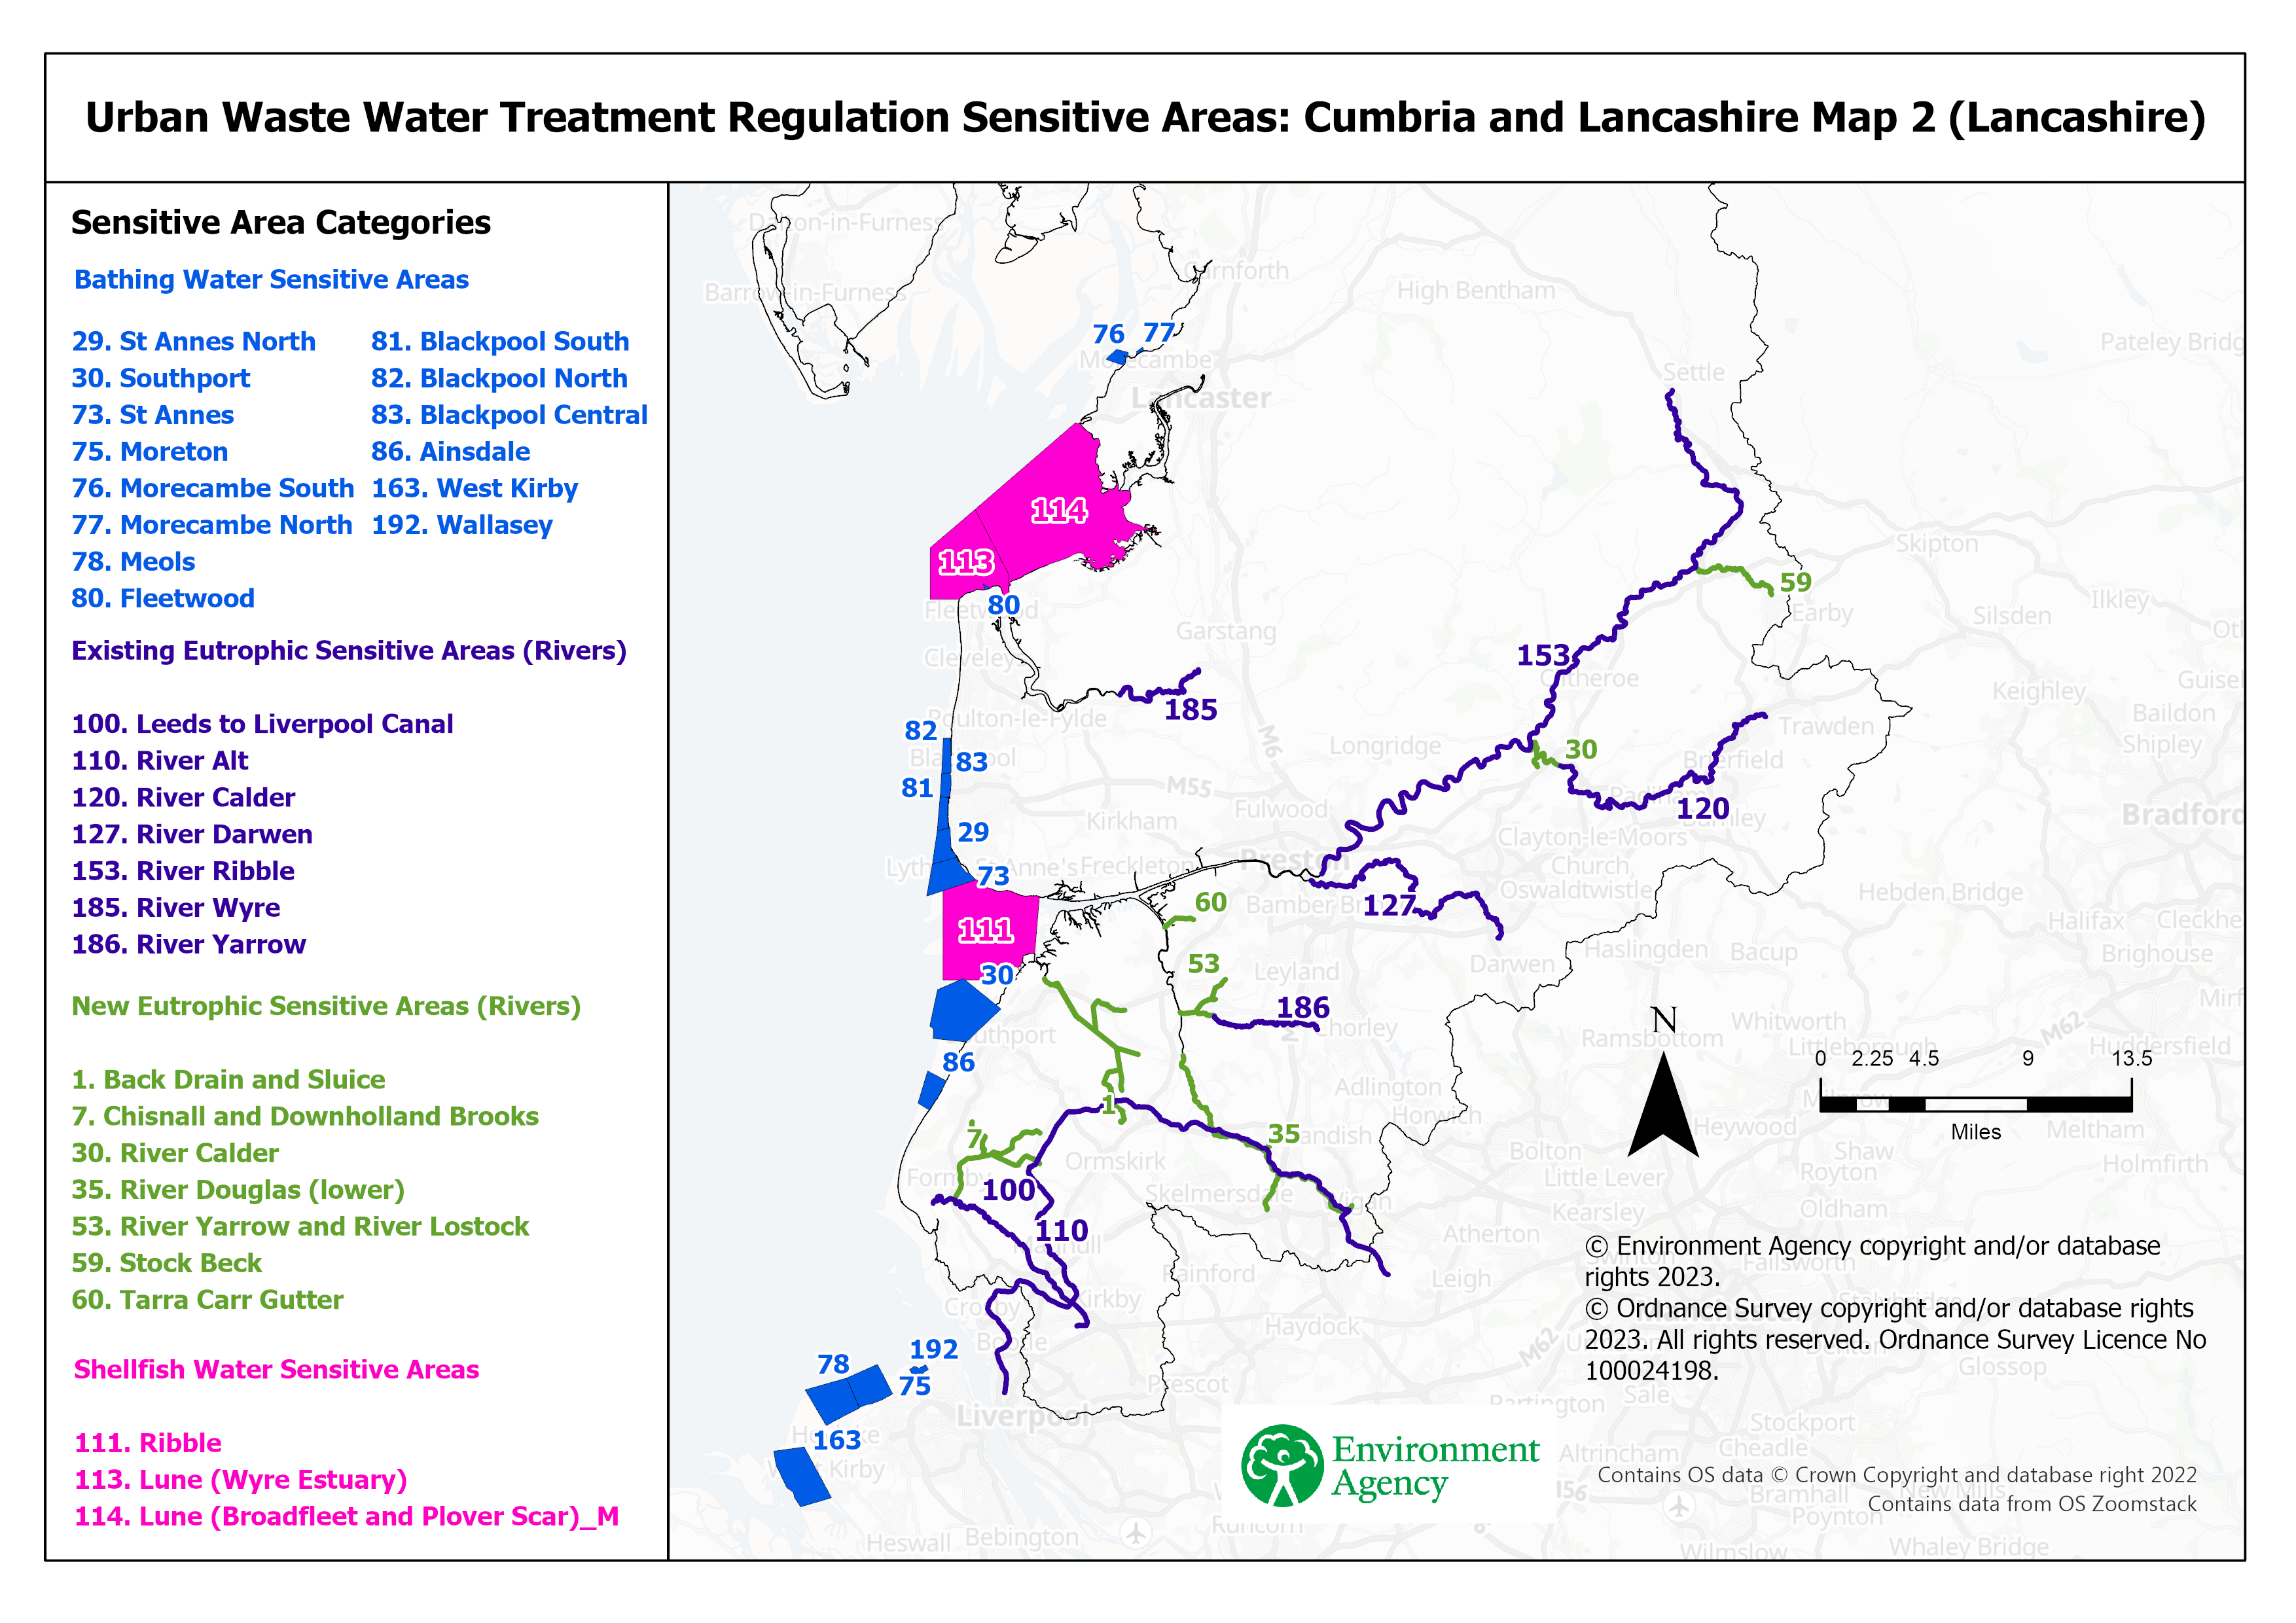 Sensitive areas Cumbria and Lancashire map 2 (Lancashire)